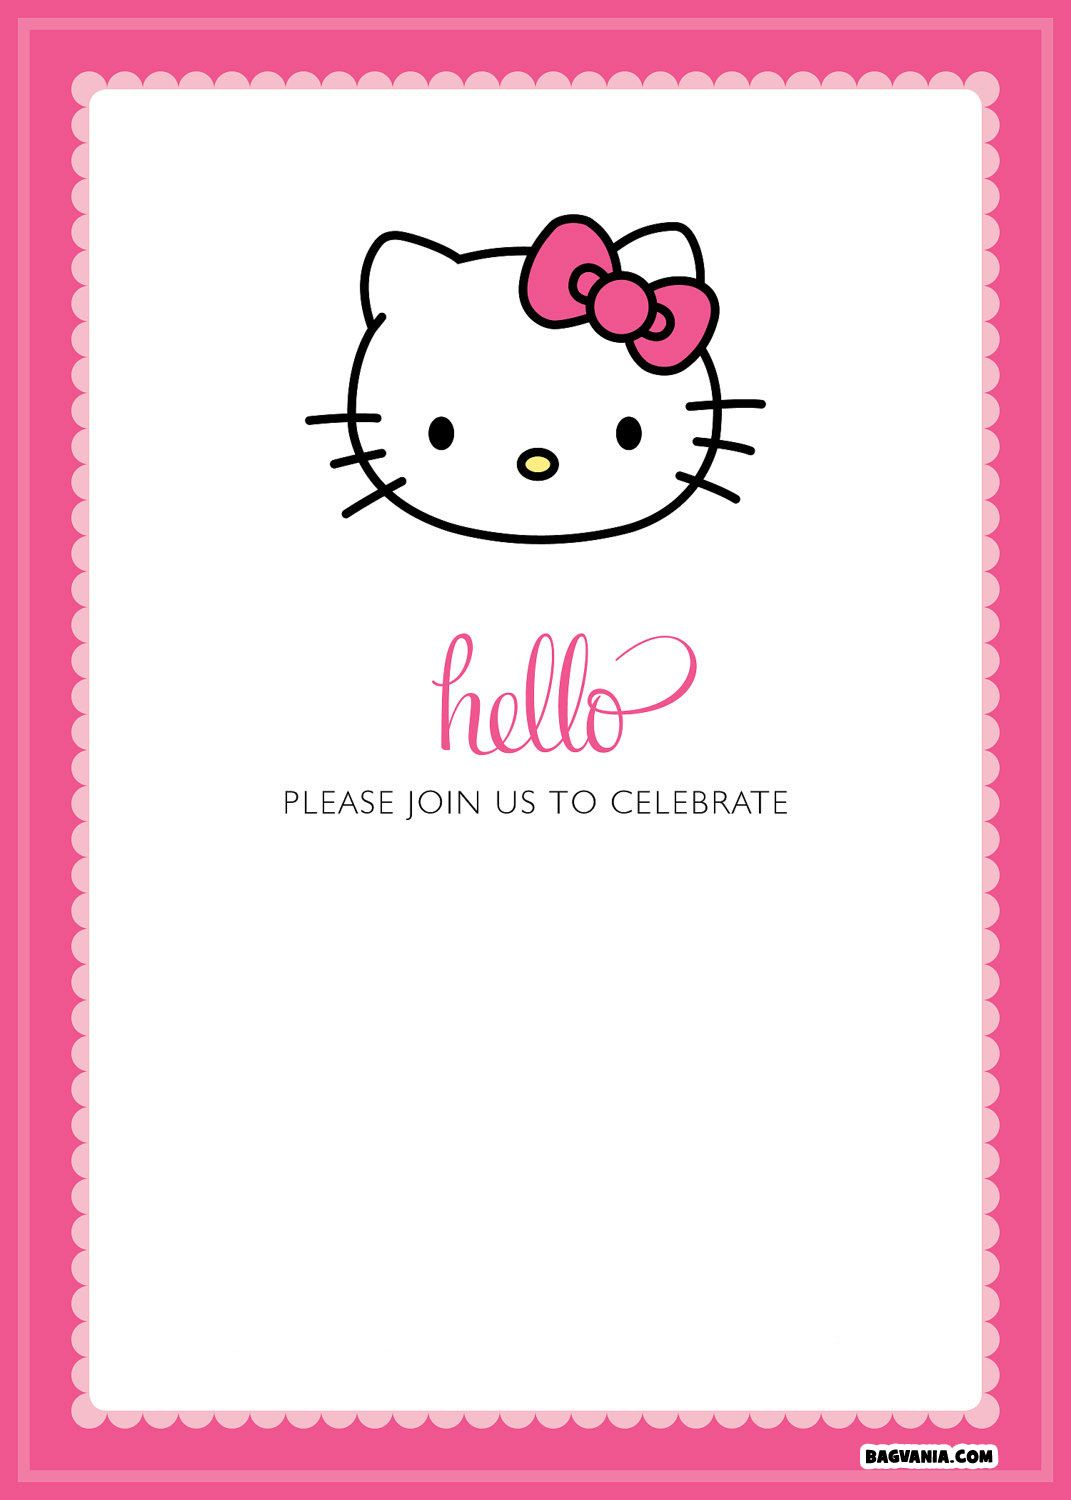 Free Printable Hello Kitty Birthday Invitations Bagvania Free within measurements 1071 X 1500